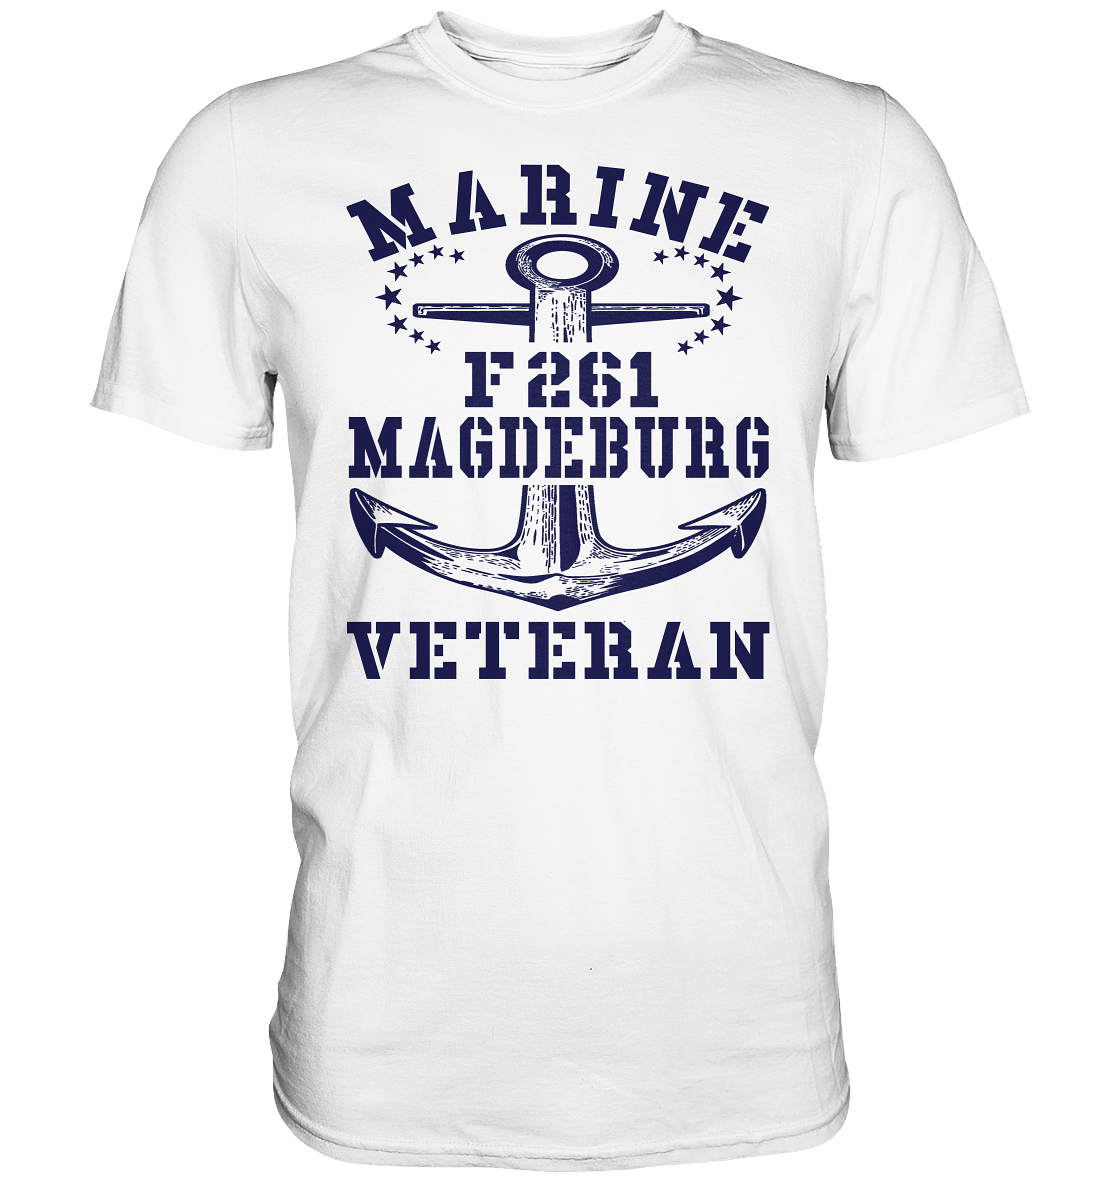 Korvette F261 MAGDEBURG Marine Veteran - Premium Shirt